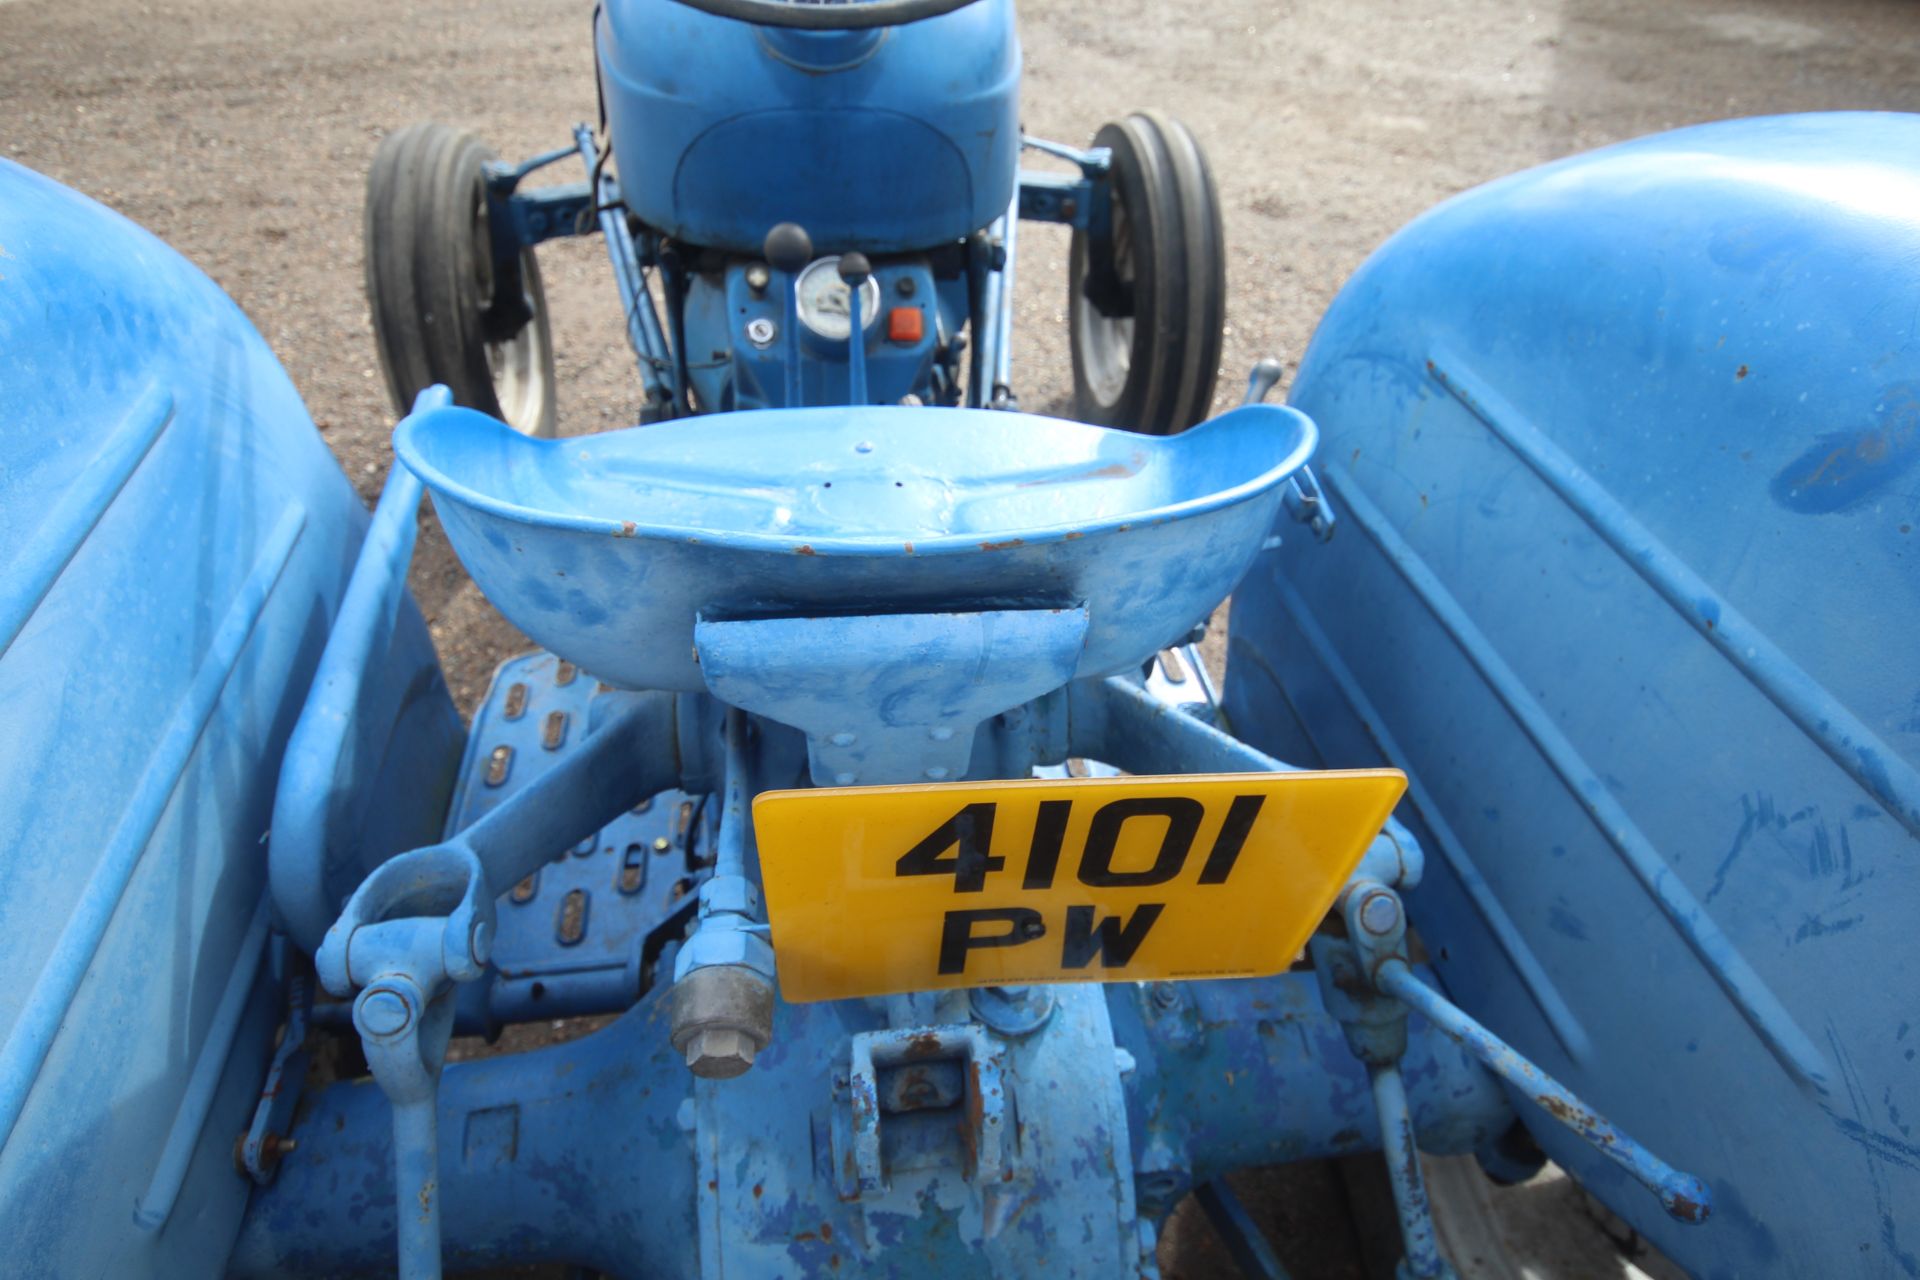 Fordson Dexta 2WD tractor. Registration 4101 PW. Date of first registration 02/02/1962. Key, V5 - Image 24 of 51